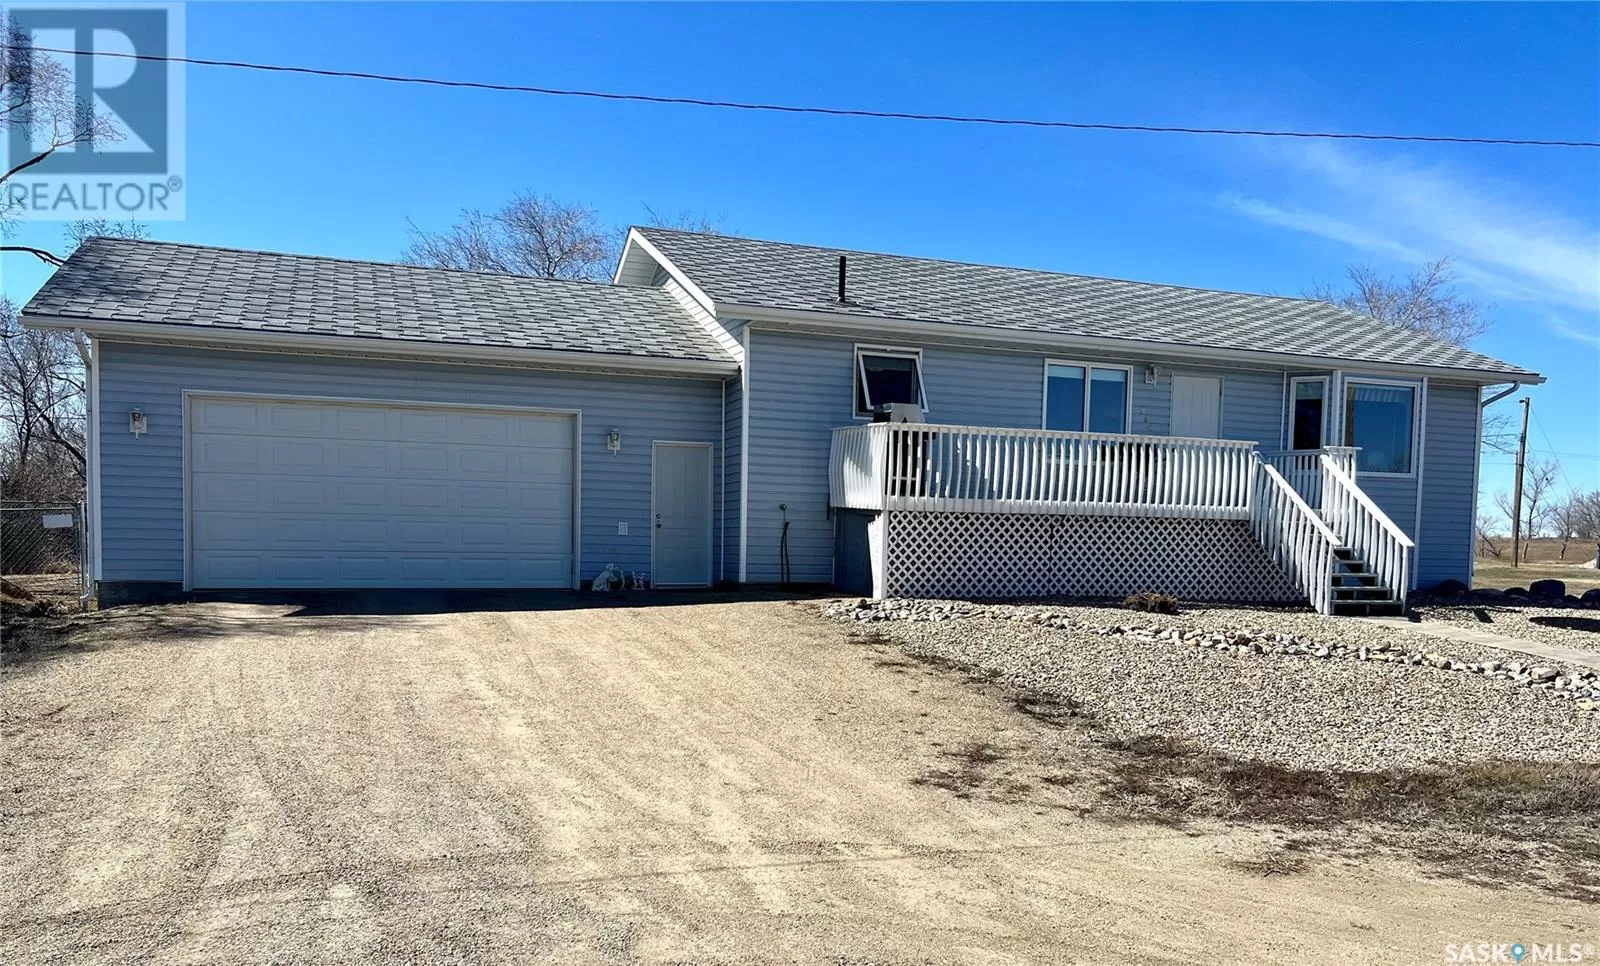 House for rent: 516 Brownlee Street, Morse, Saskatchewan S0H 3C0